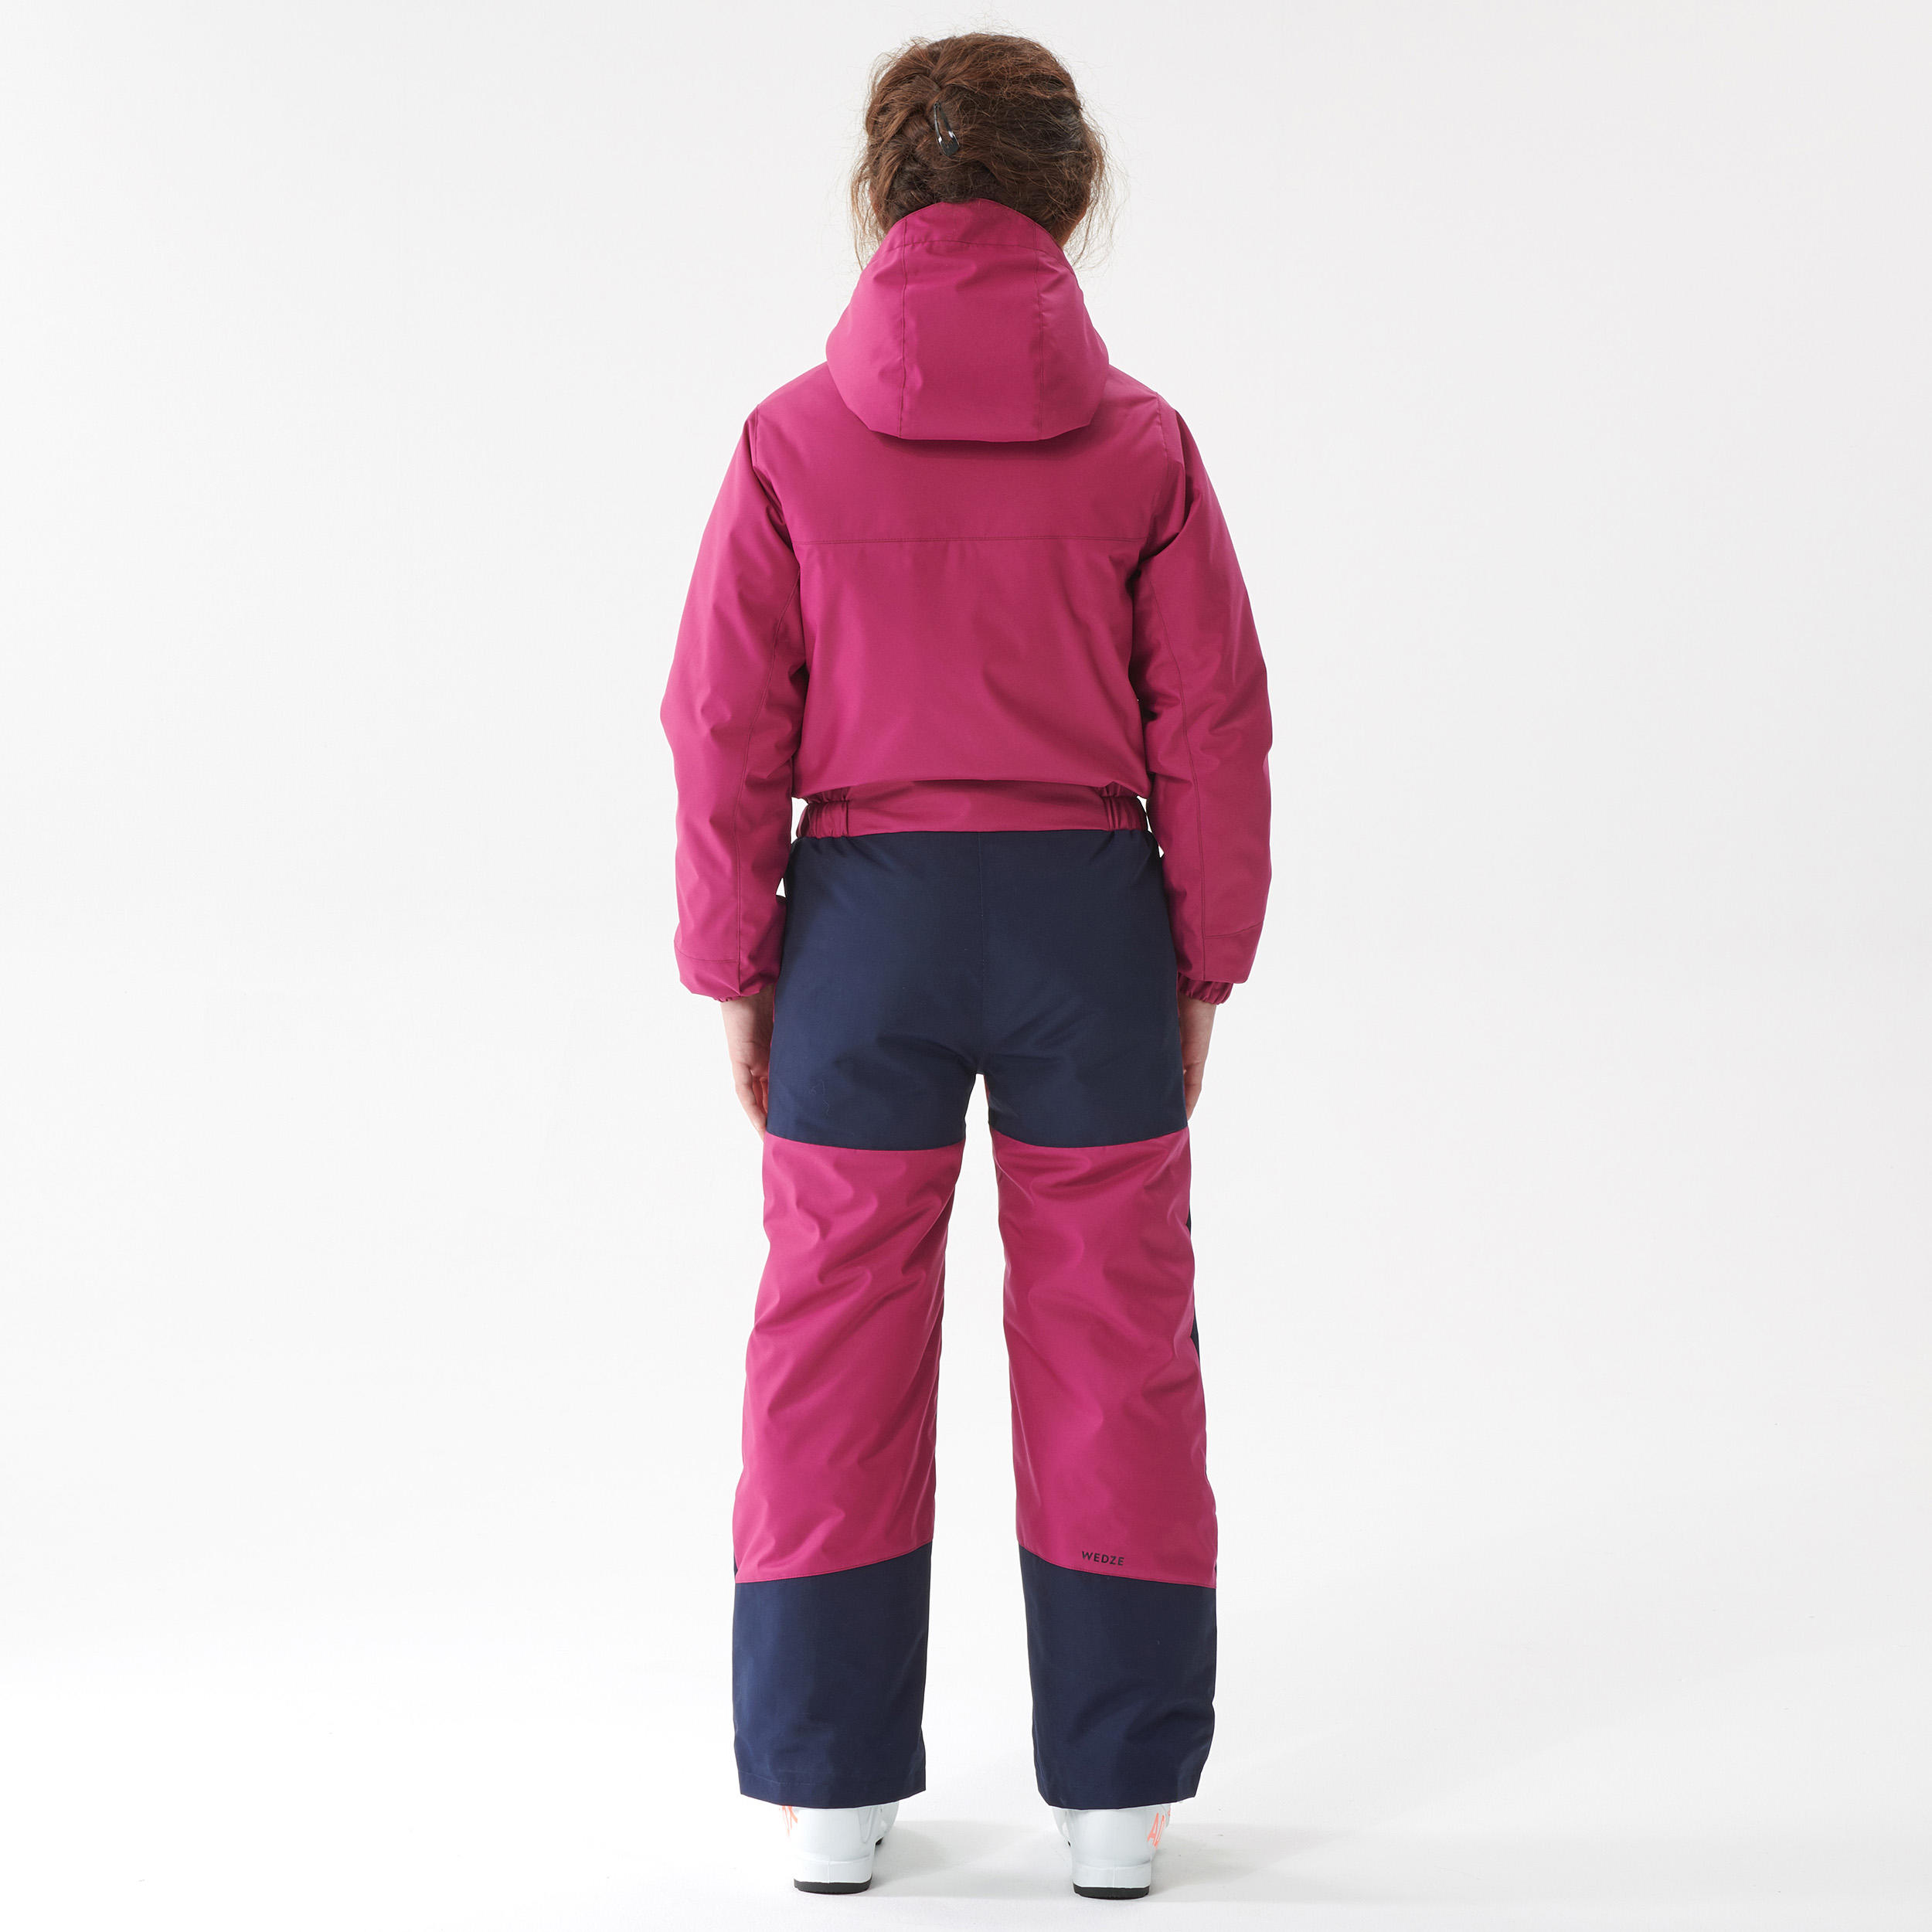 Kids’ Snowsuit - 100 Pink/Navy Blue - WEDZE